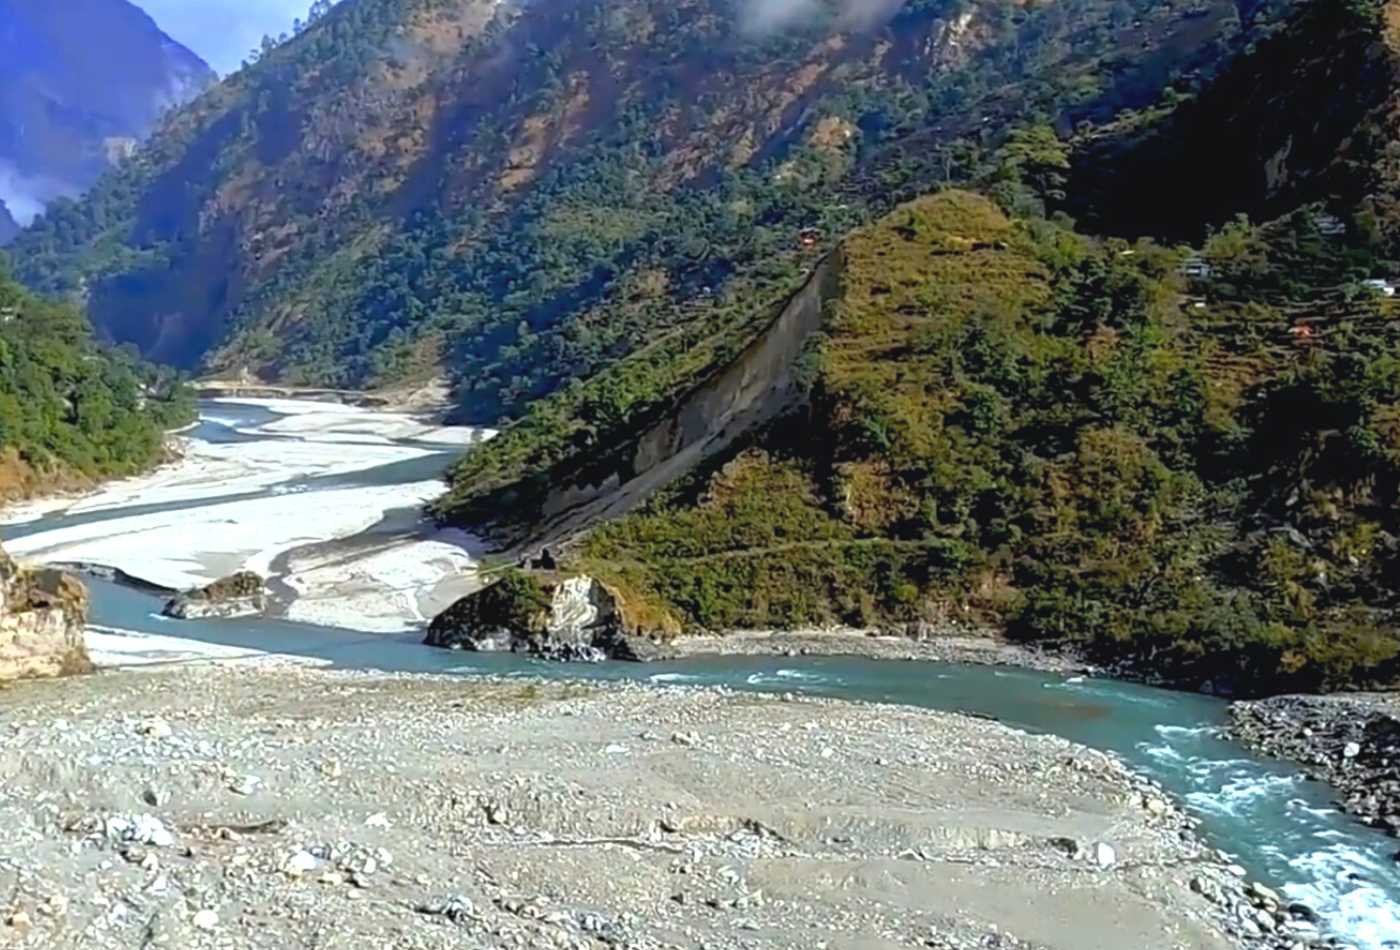 A scene of the Budi Gandaki river during the Manaslu Circuit Trek. The crystal-clear water flows peacefully through a lush green landscape. 